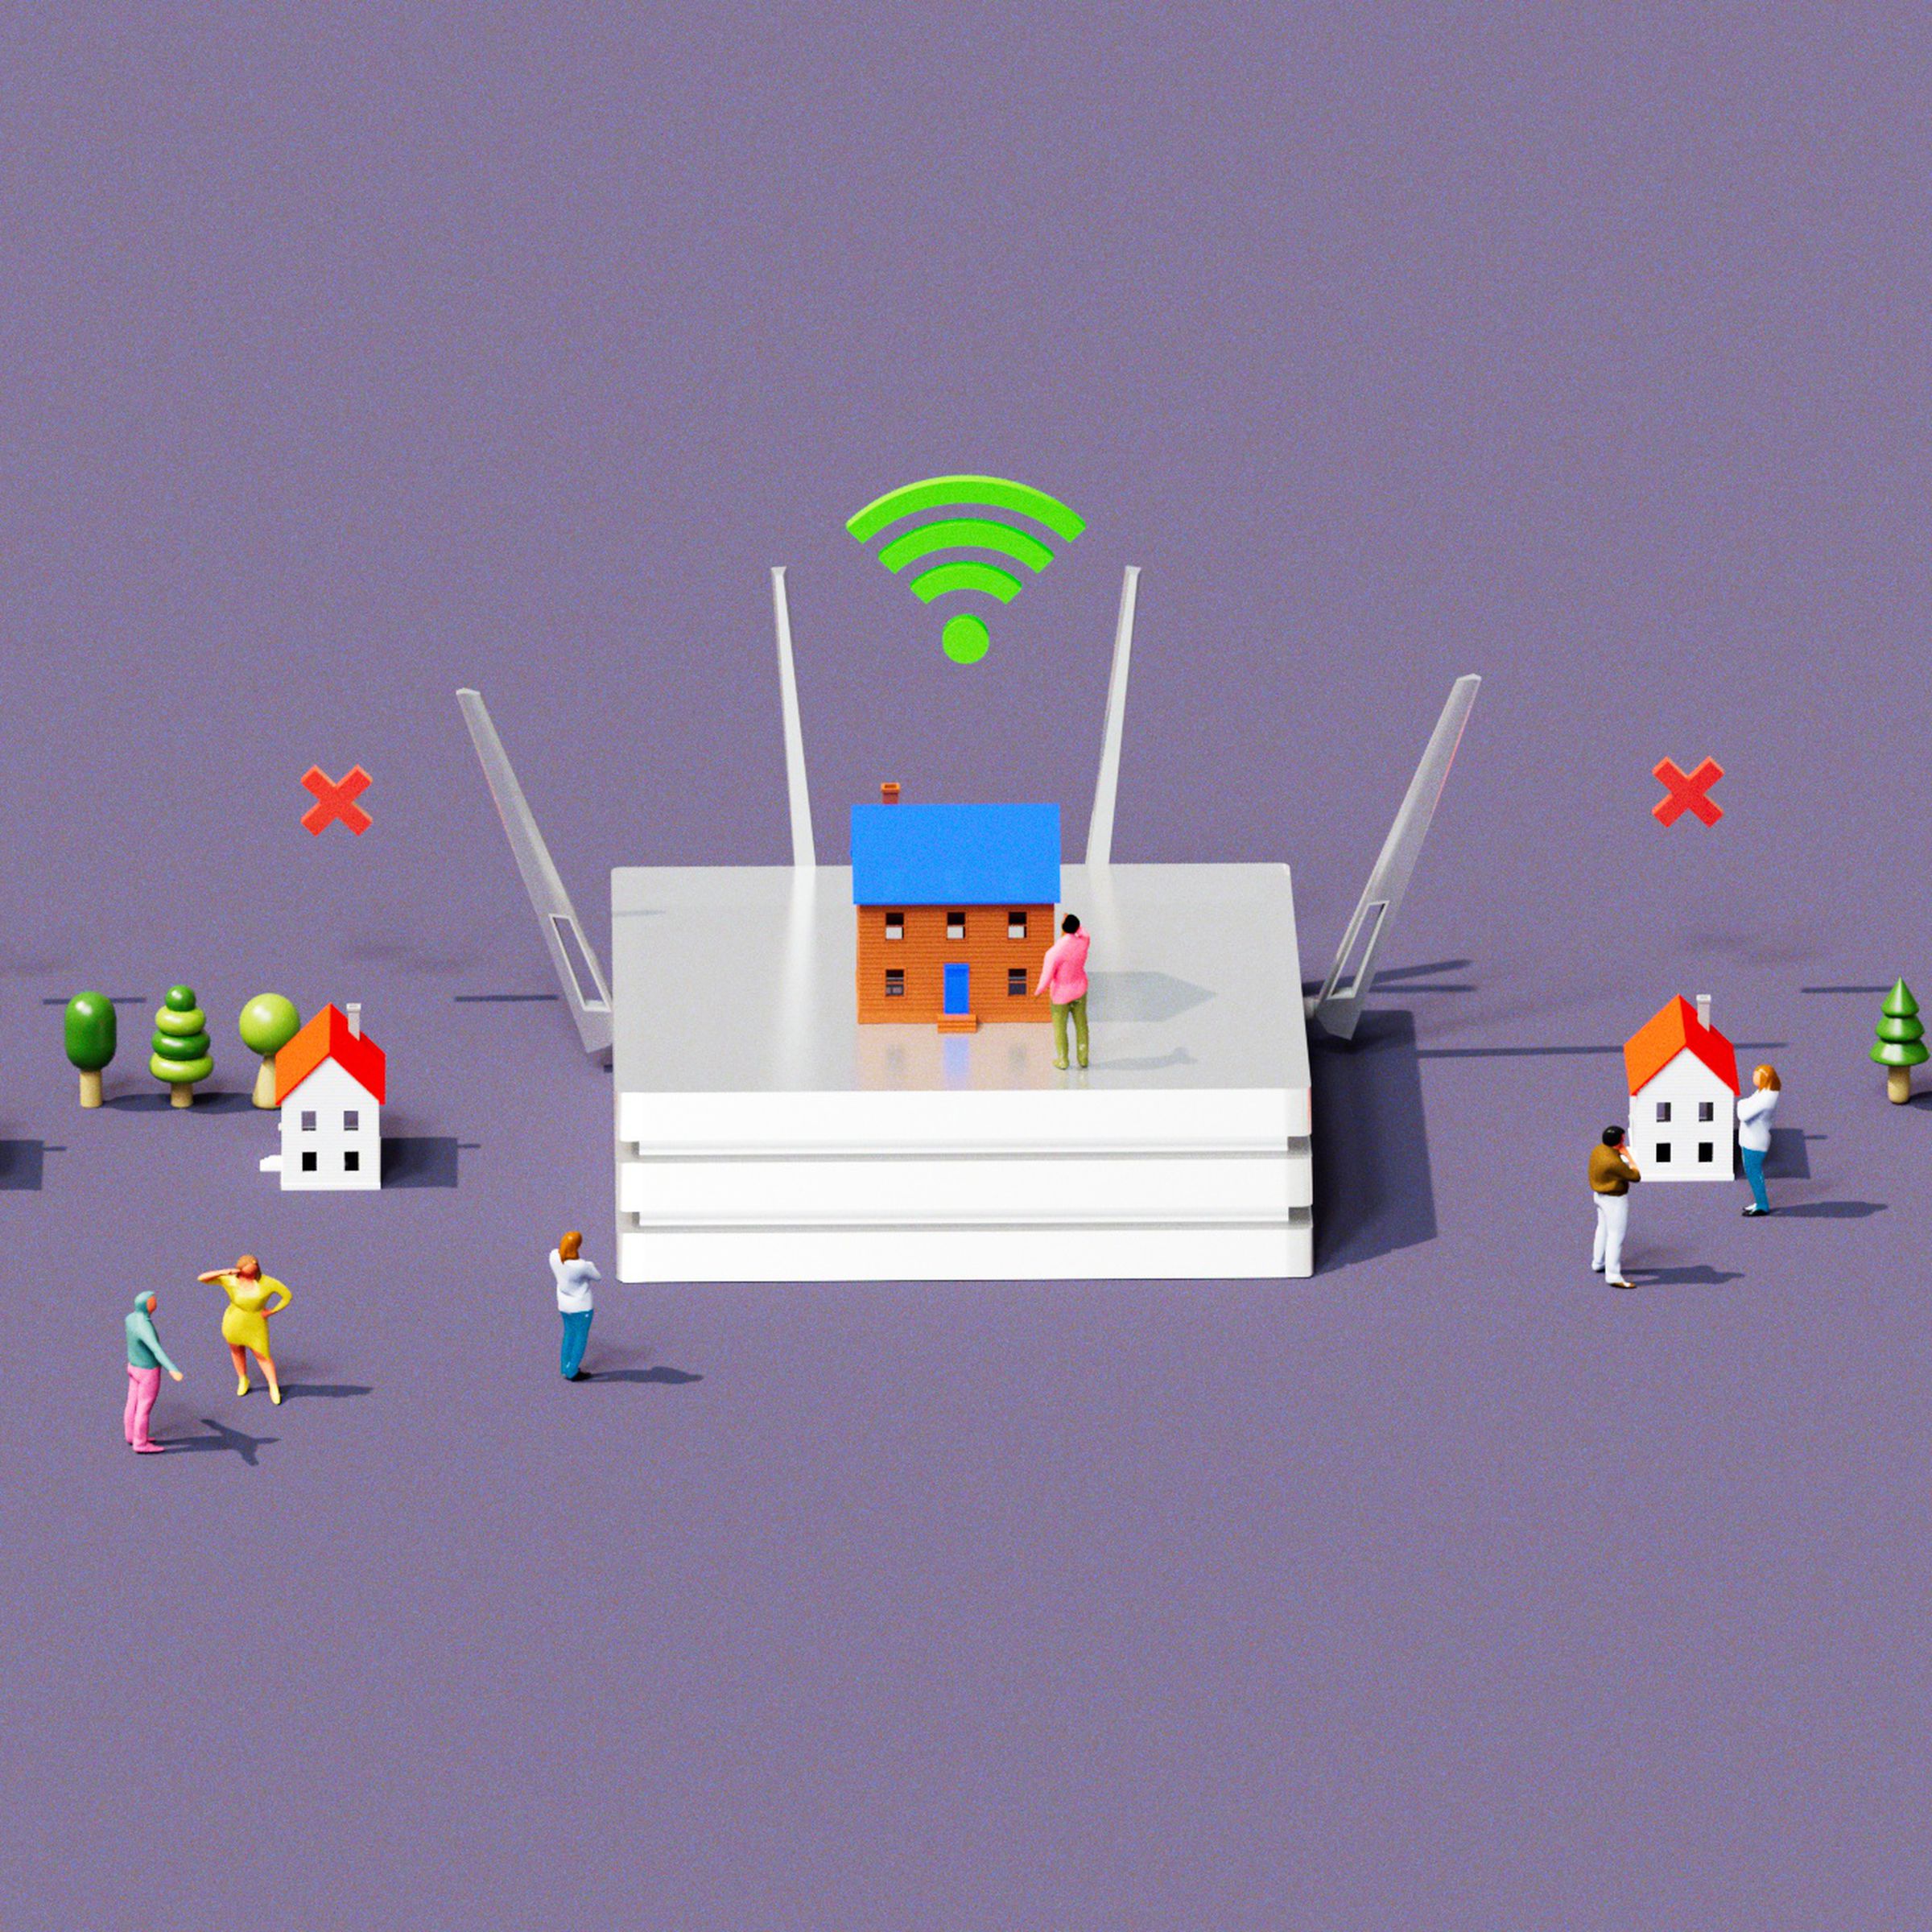 3D illustration showing discriminatory patterns in internet access.